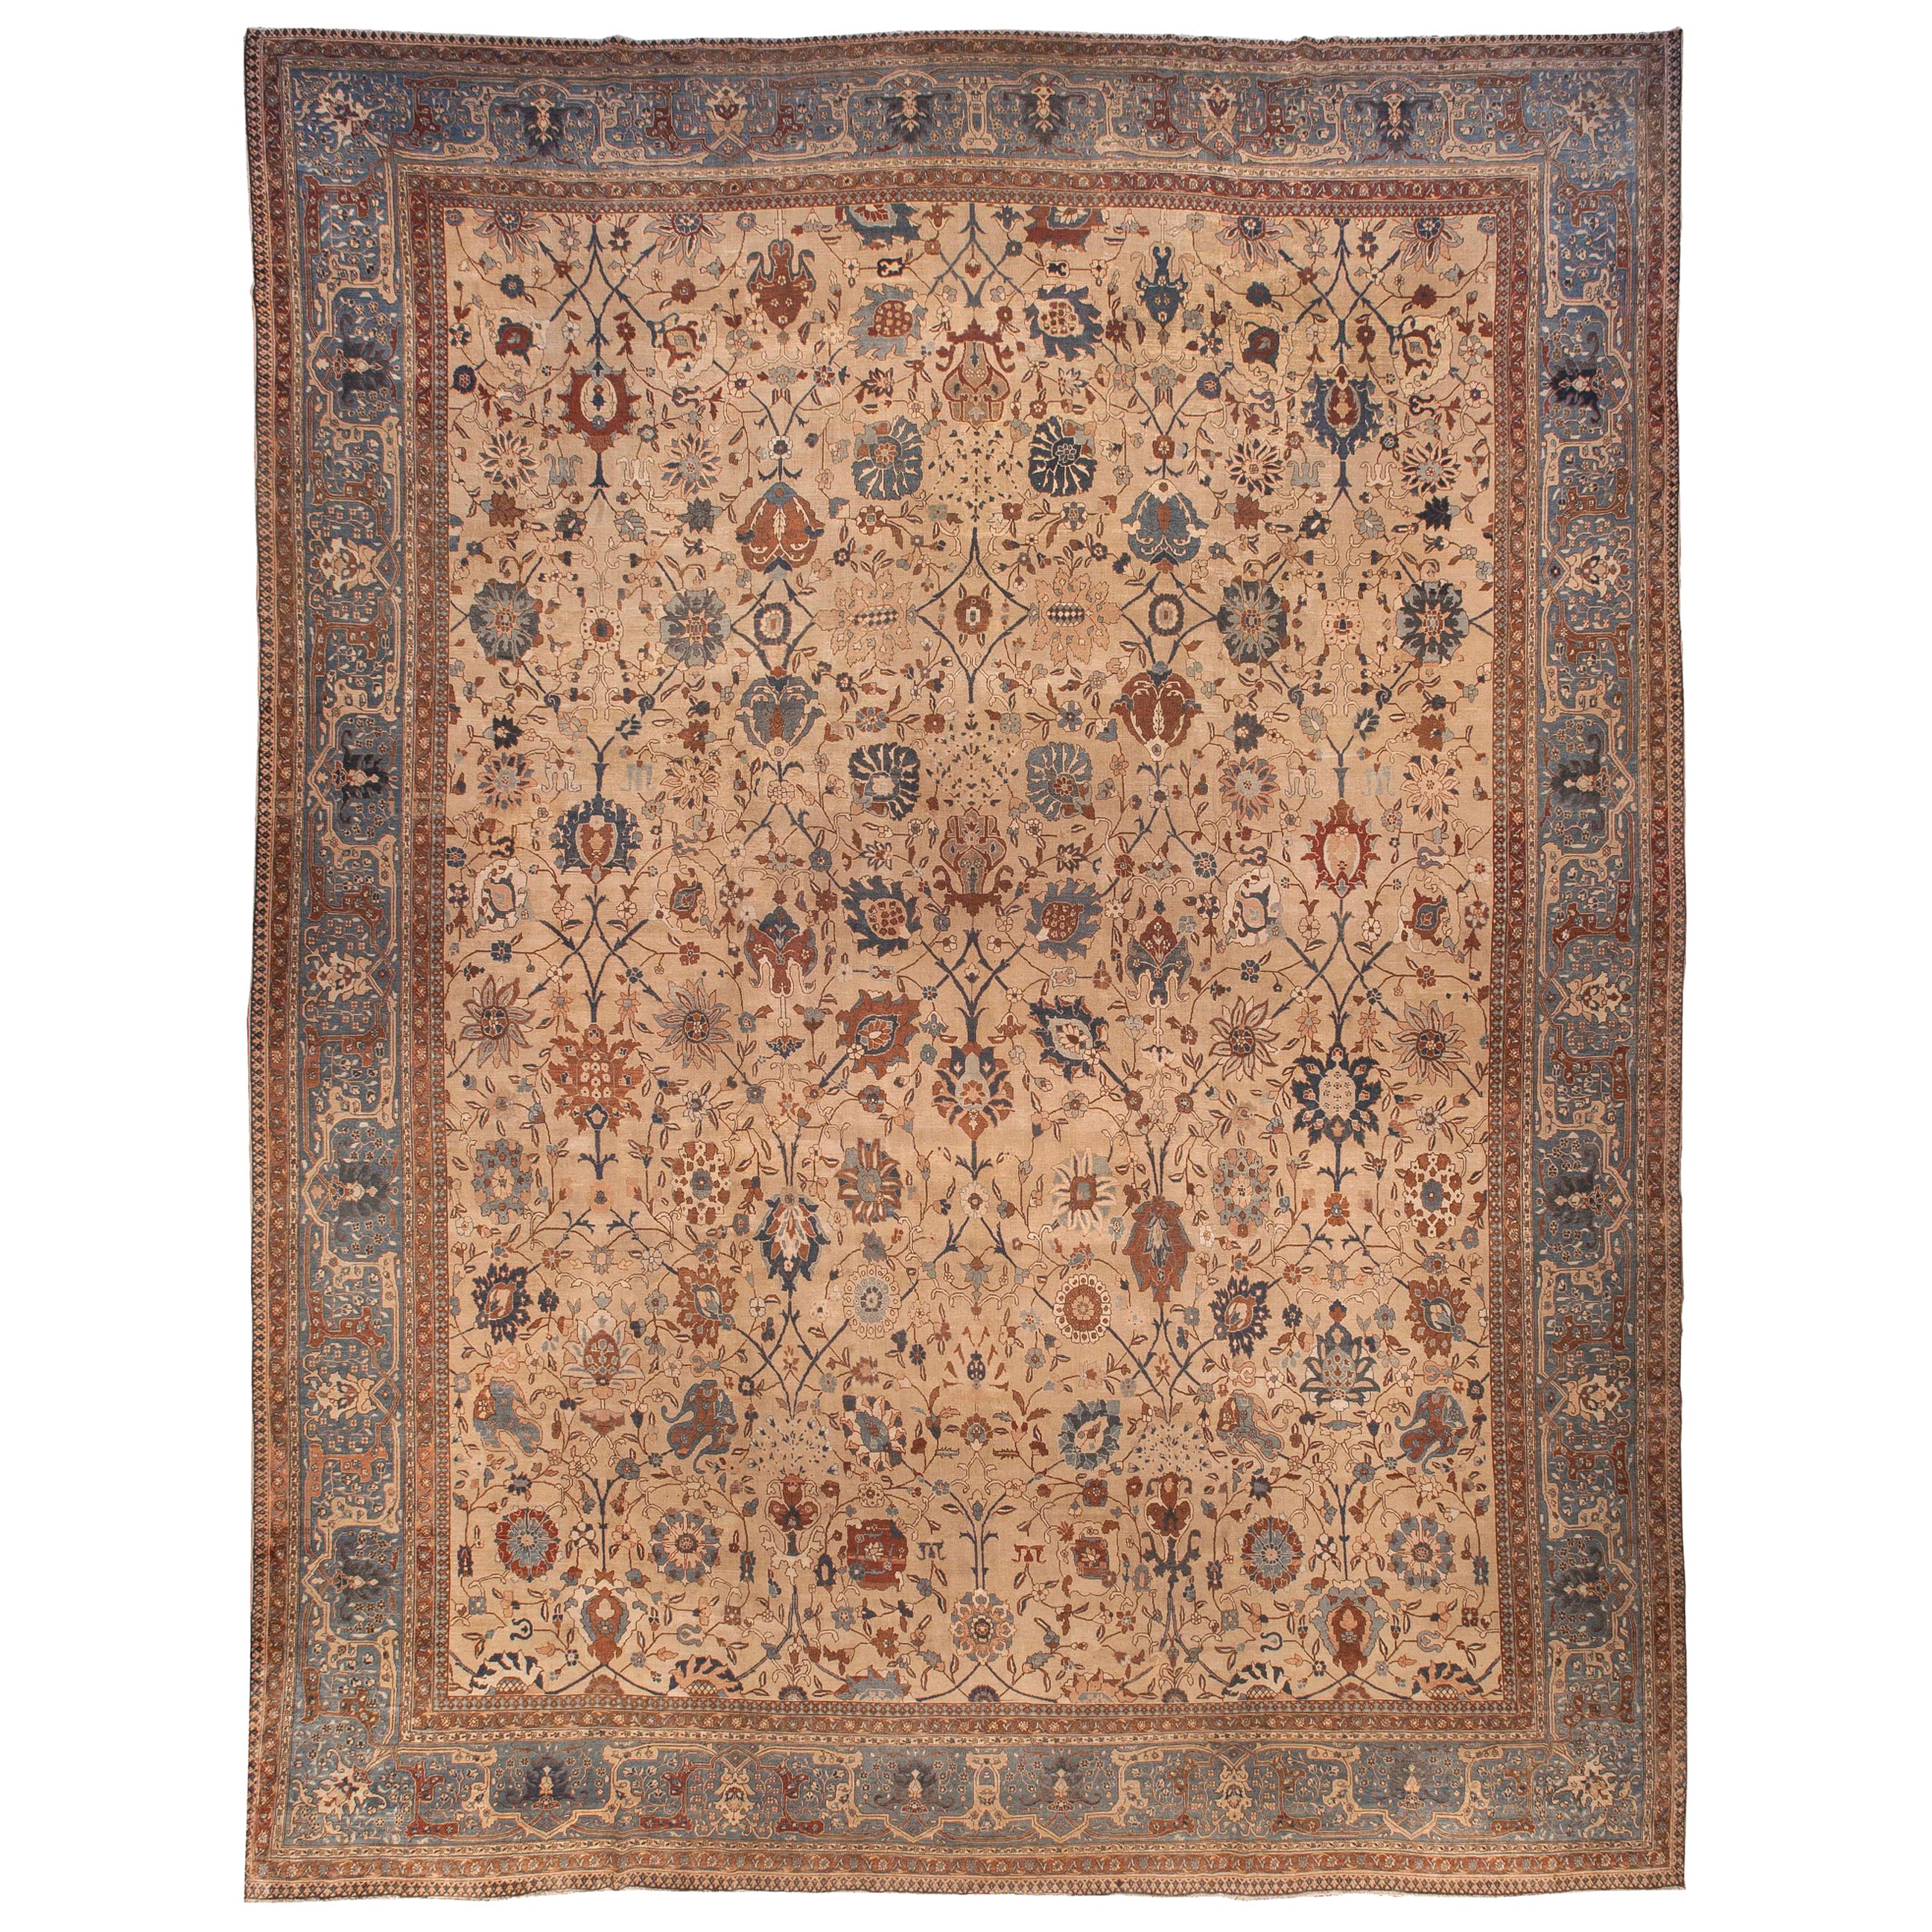 Extra Large Antique Persian Tabriz Handmade Rug